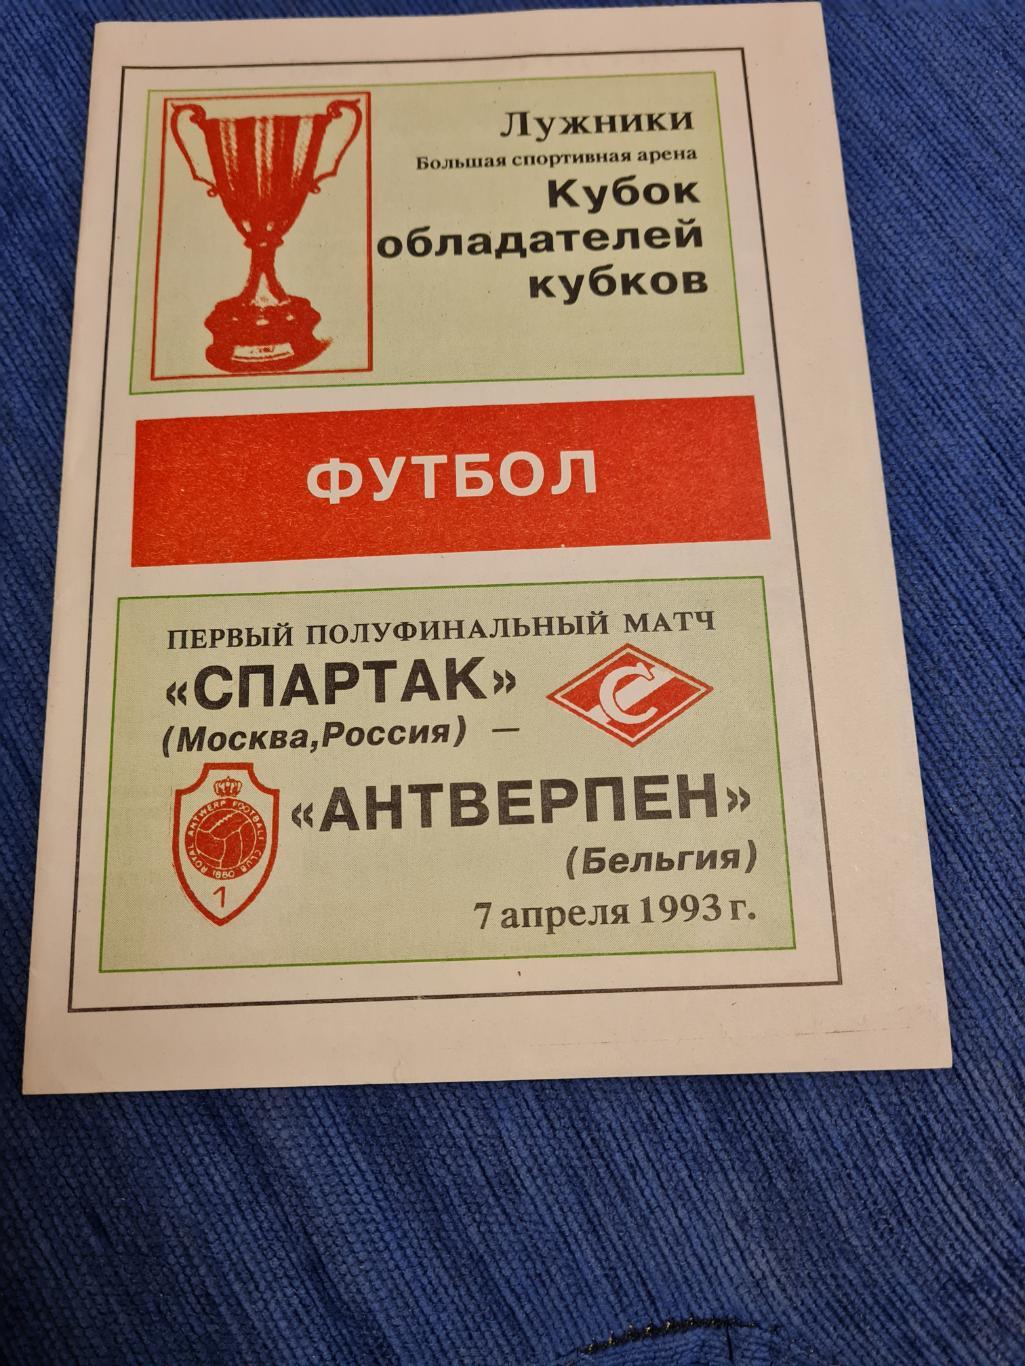 17.03.1993. Спартак - Антверпен.2 программки+билет.